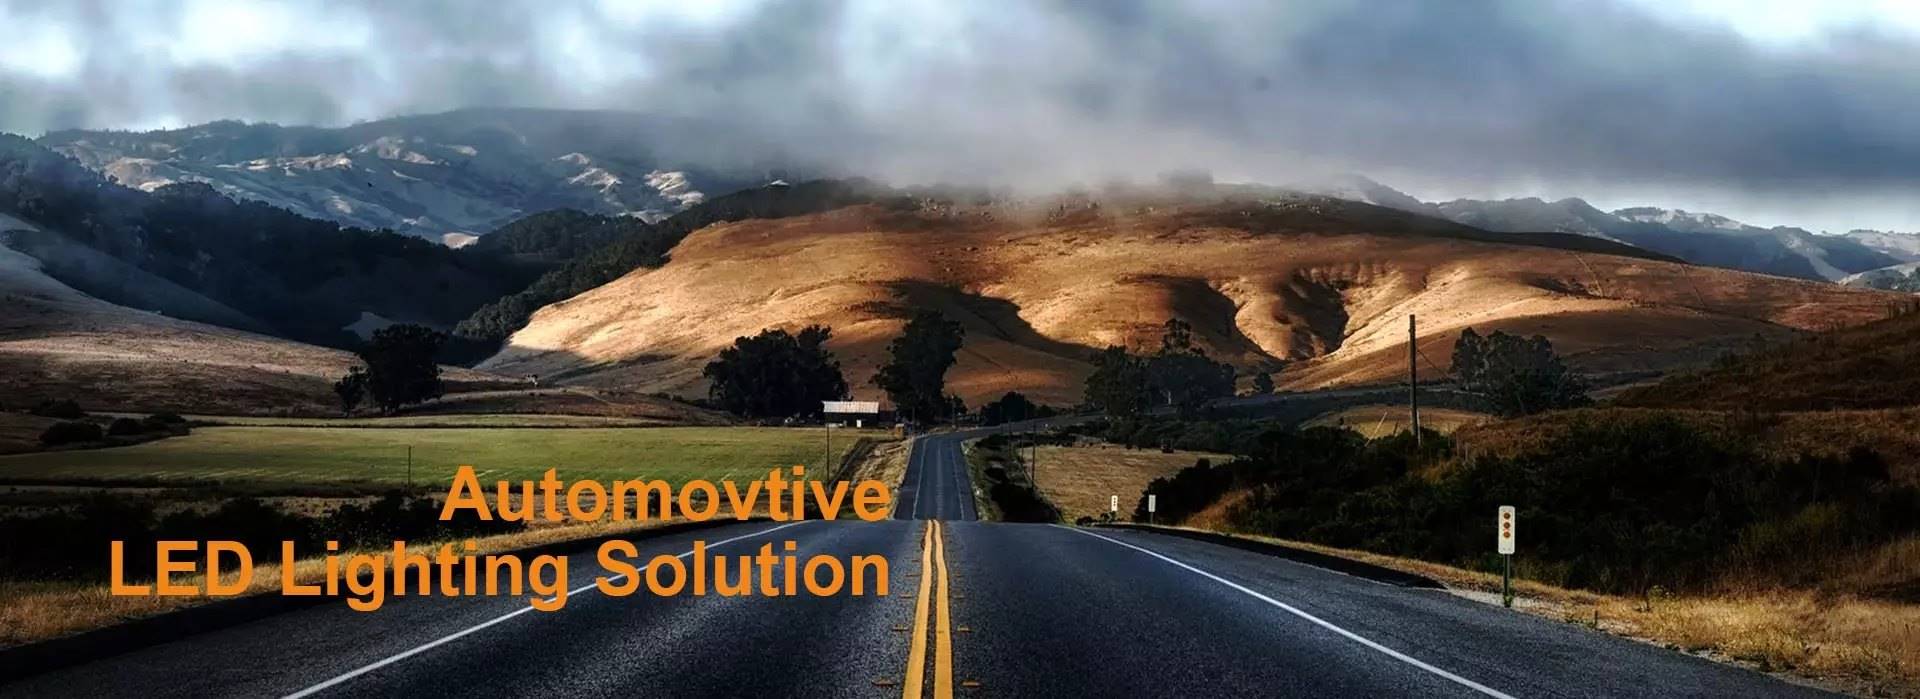 Automovtive Vehicles LED Lighting Solution-nokpro